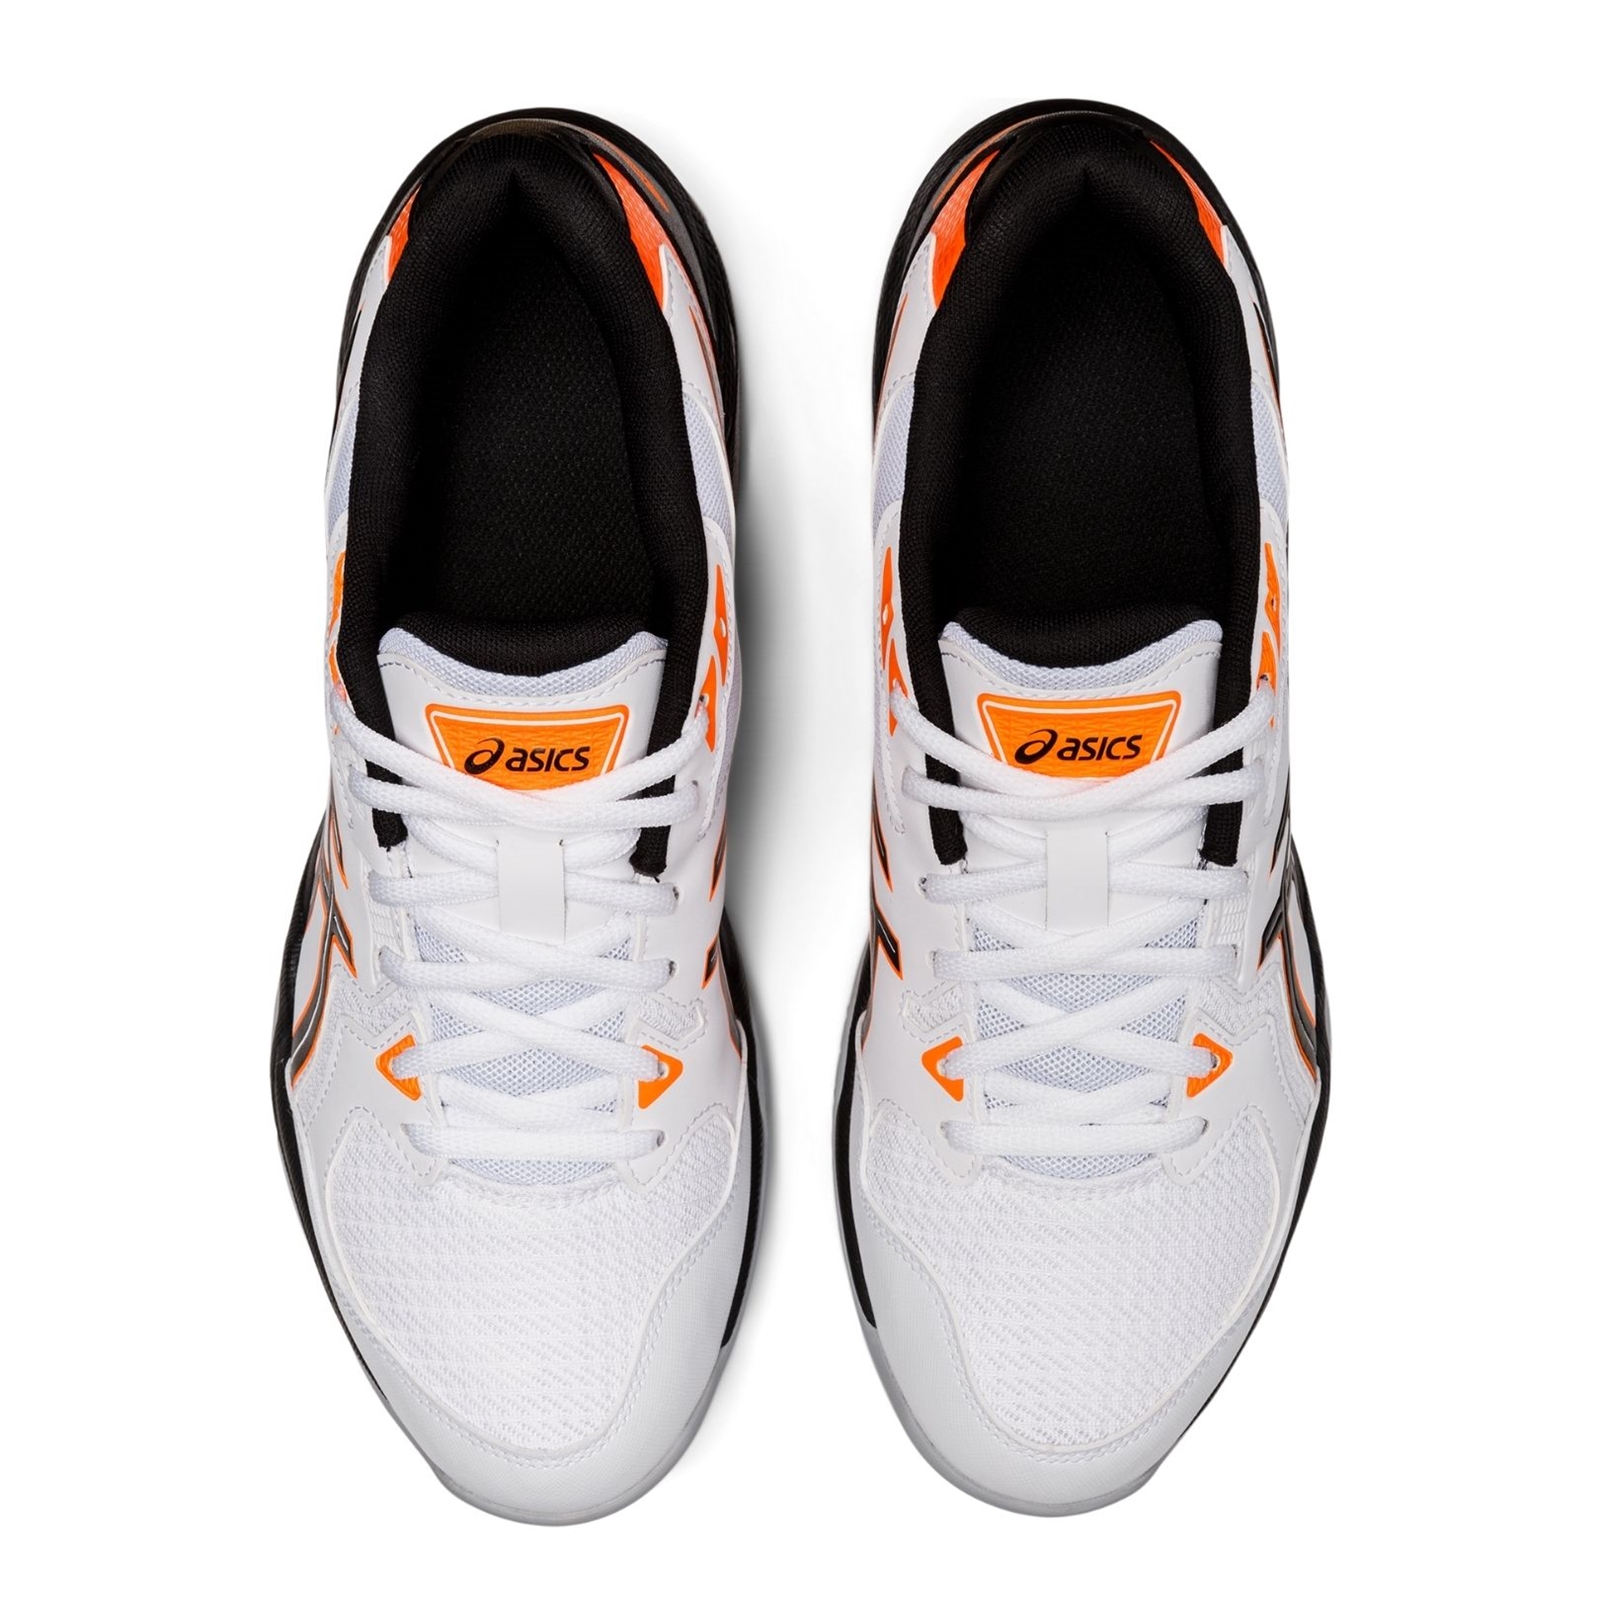 Asics Gel-Rocket 10 White | Badminton shoes → Buy here!